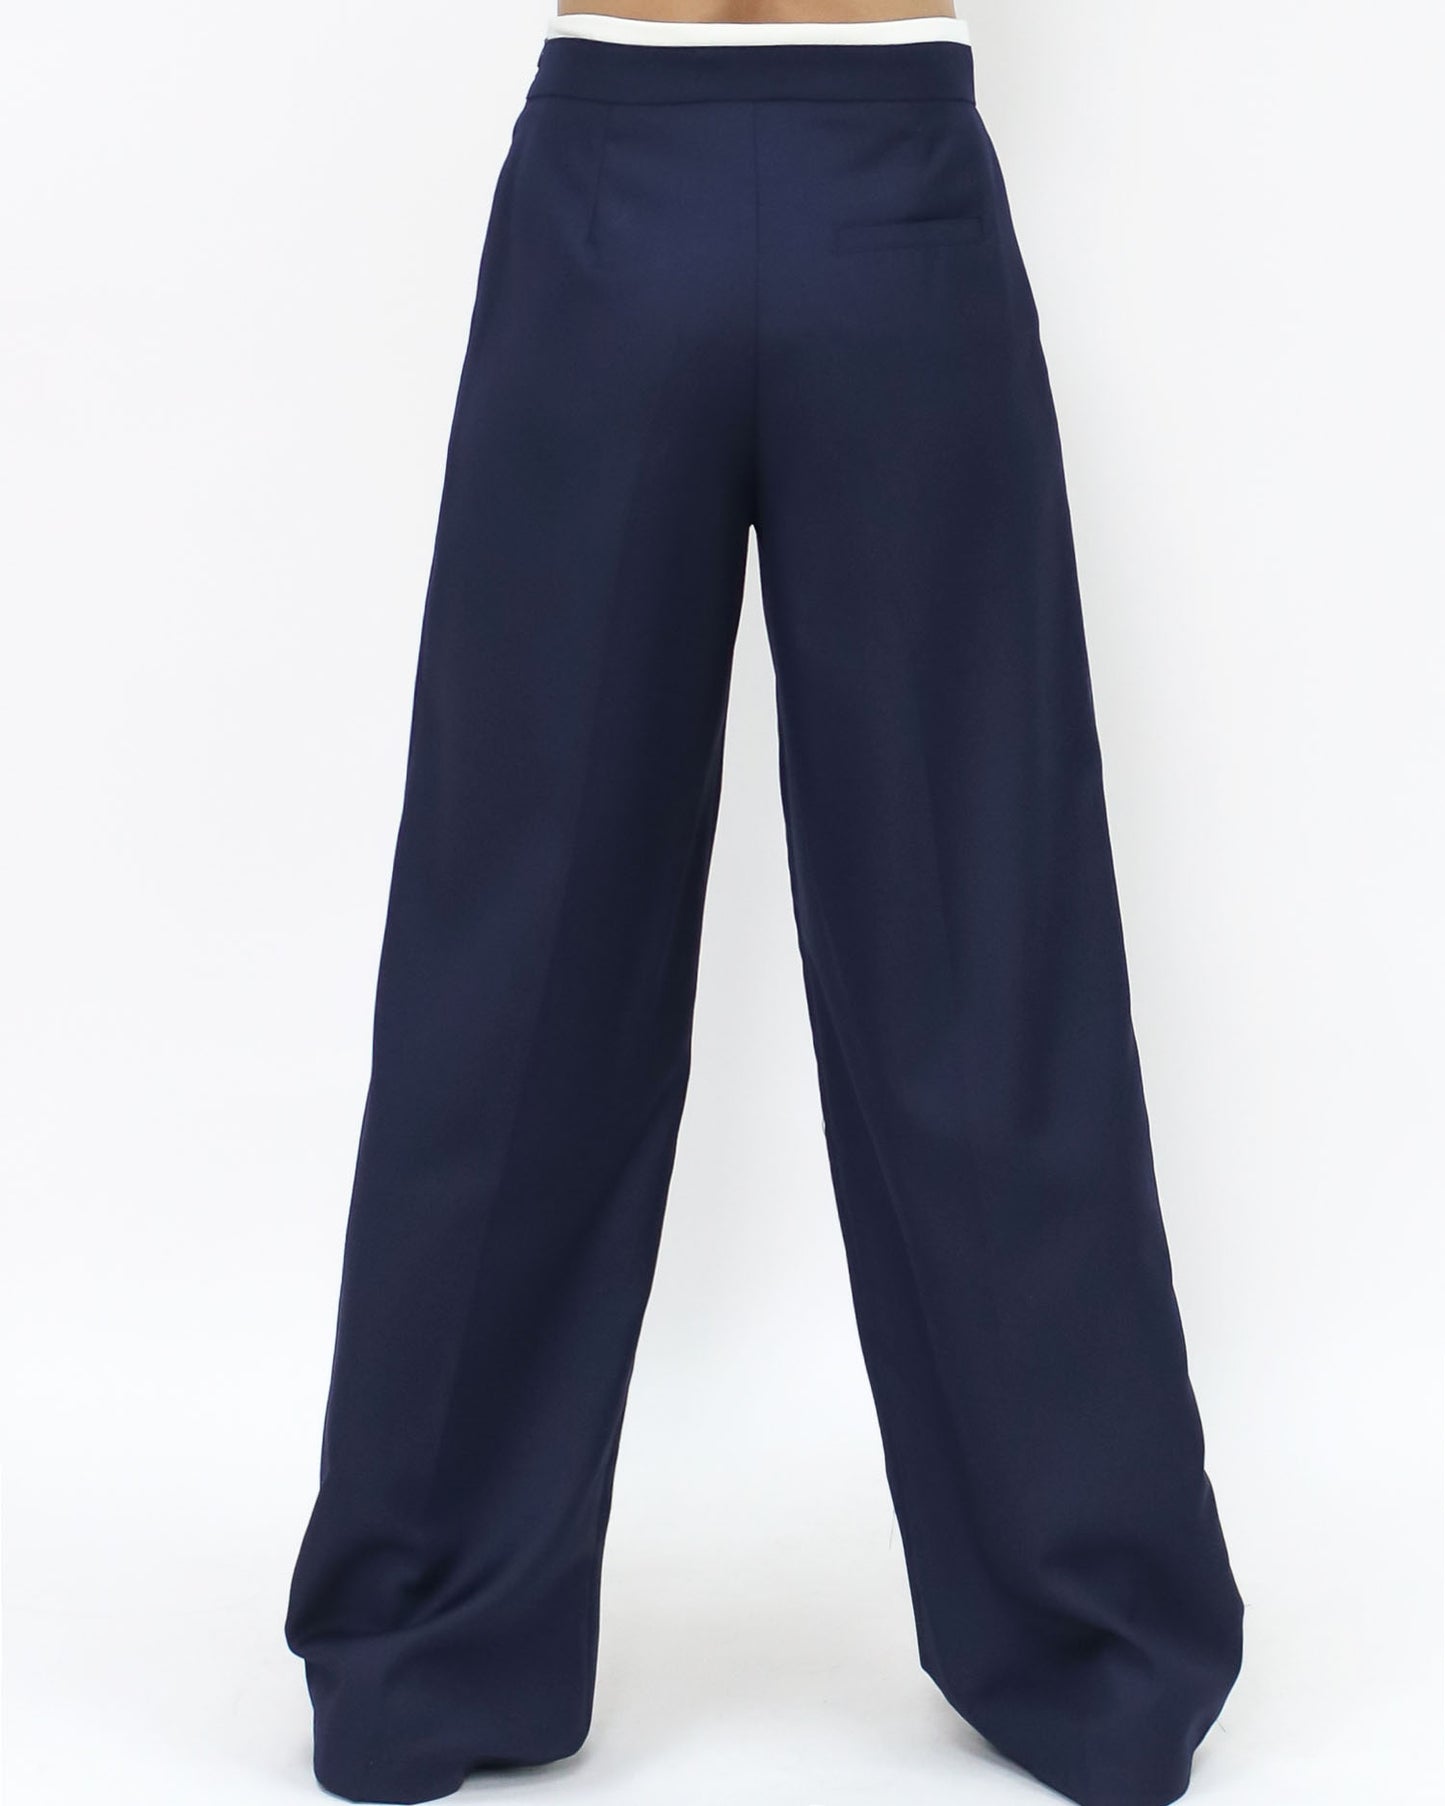 navy w/ ivory trim straight leg pants *pre-order*